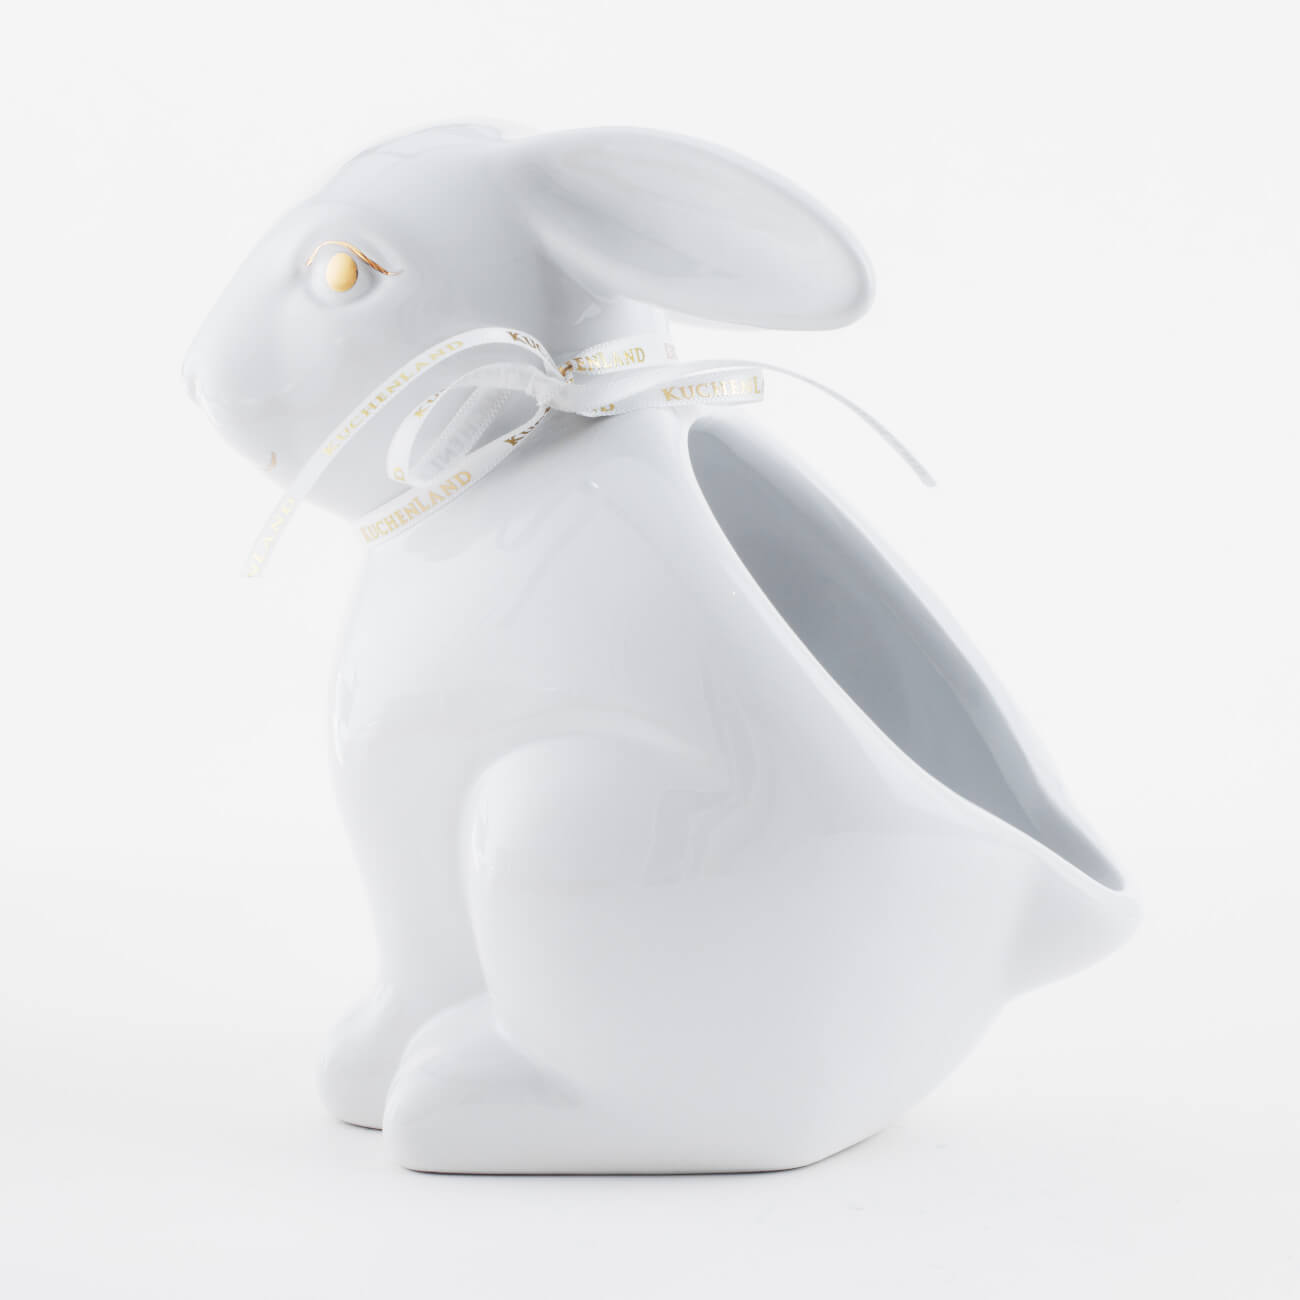 Конфетница, 17х17 см, керамика, белая, Кролик, Easter gold конфетница 25х16 см полирезин кролик с корзинкой easter